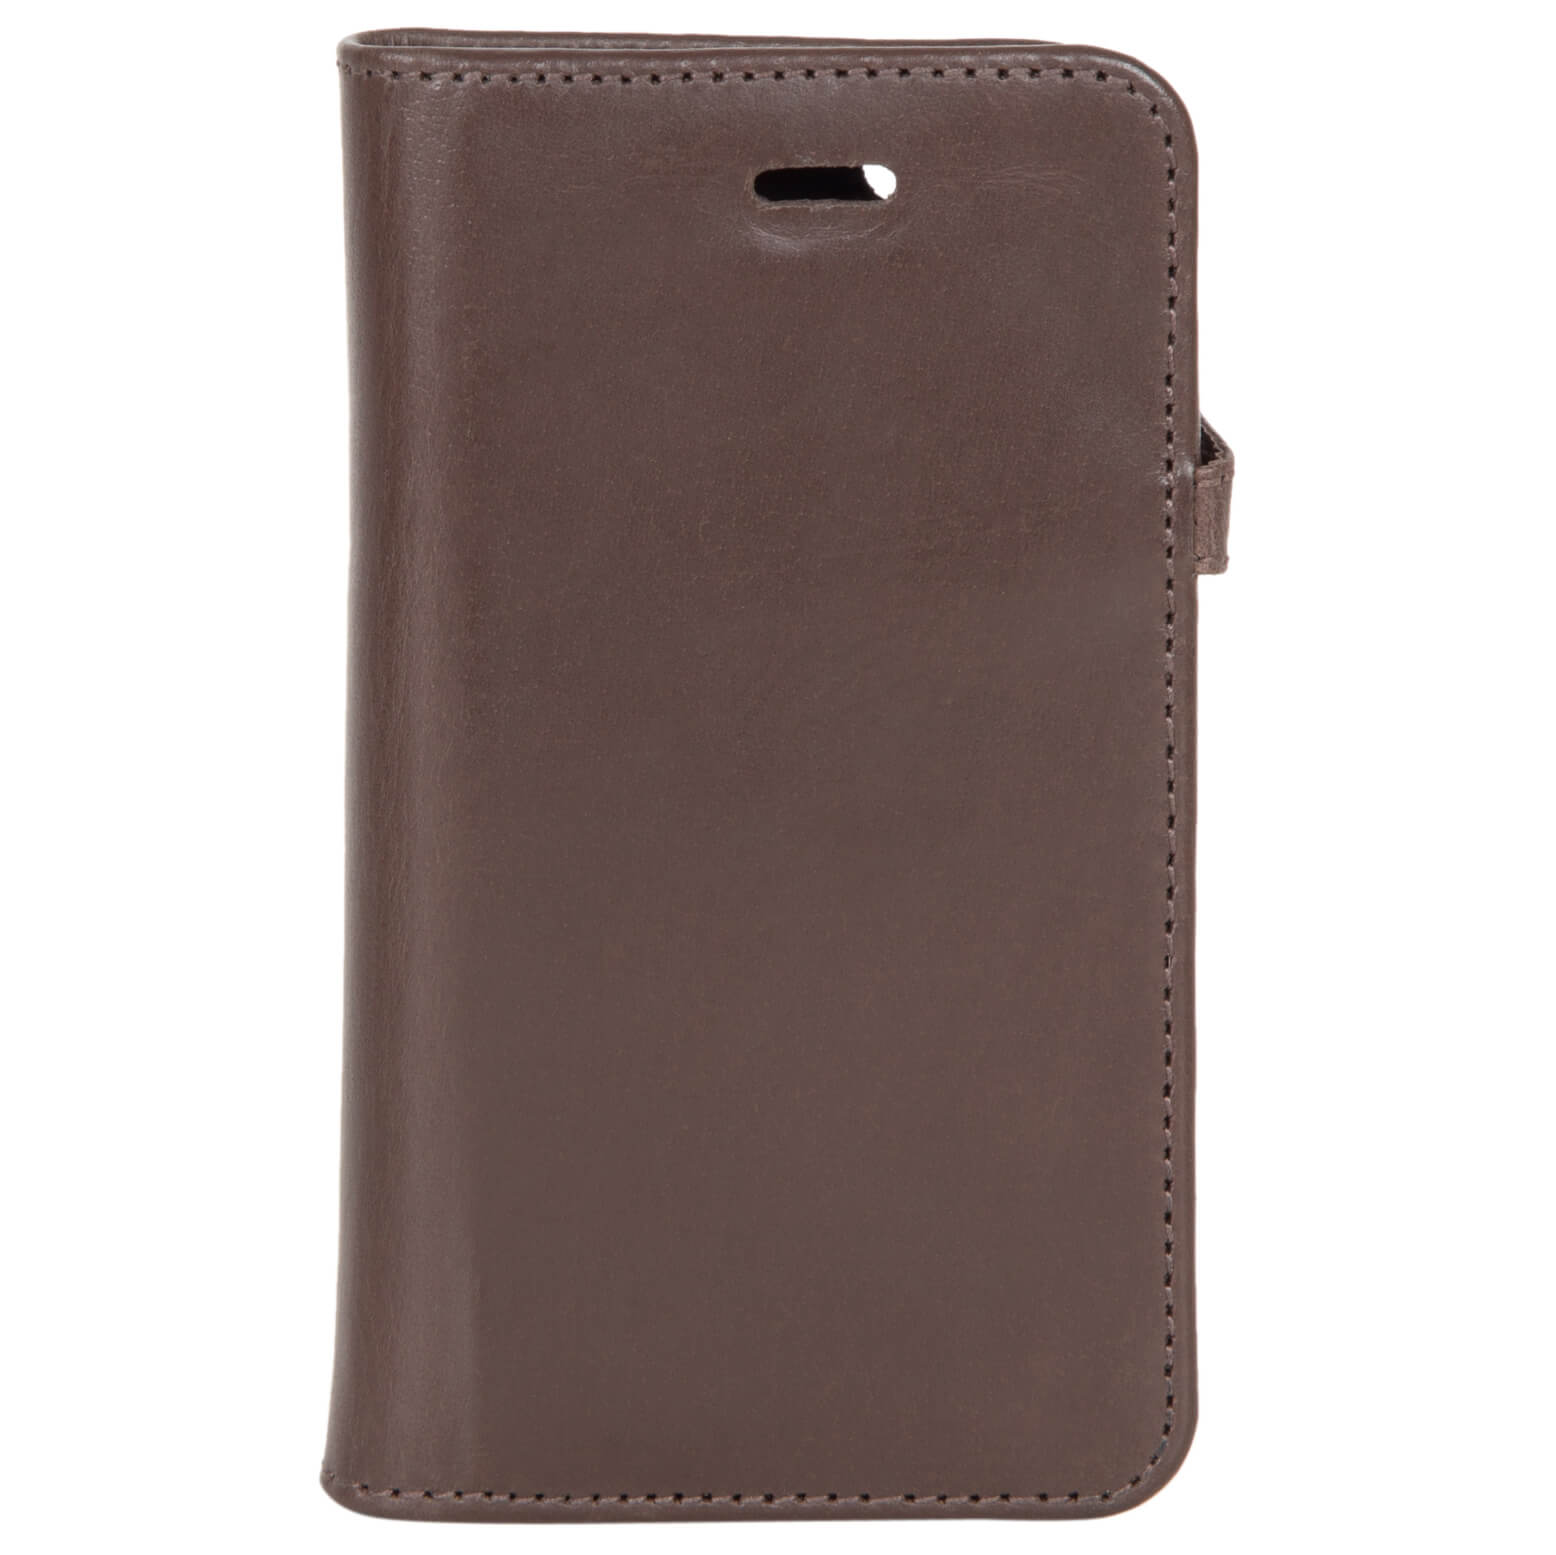 Wallet Case  Brown - iPhone 5 / 5S / SE